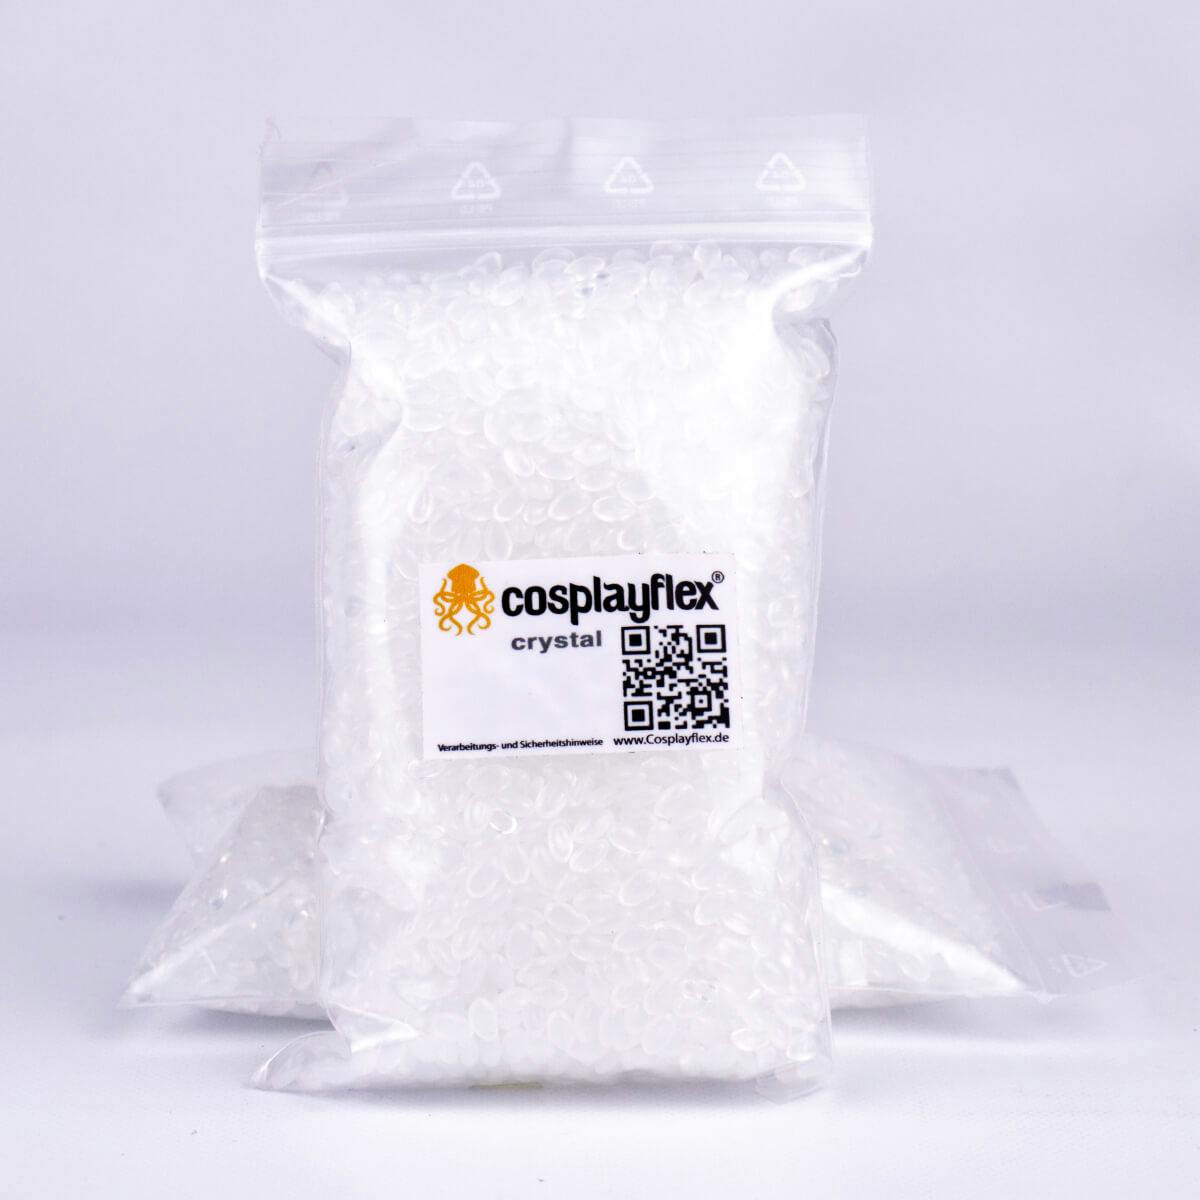 Bag of Cosplayflex Crystal - thermoplastic crystals